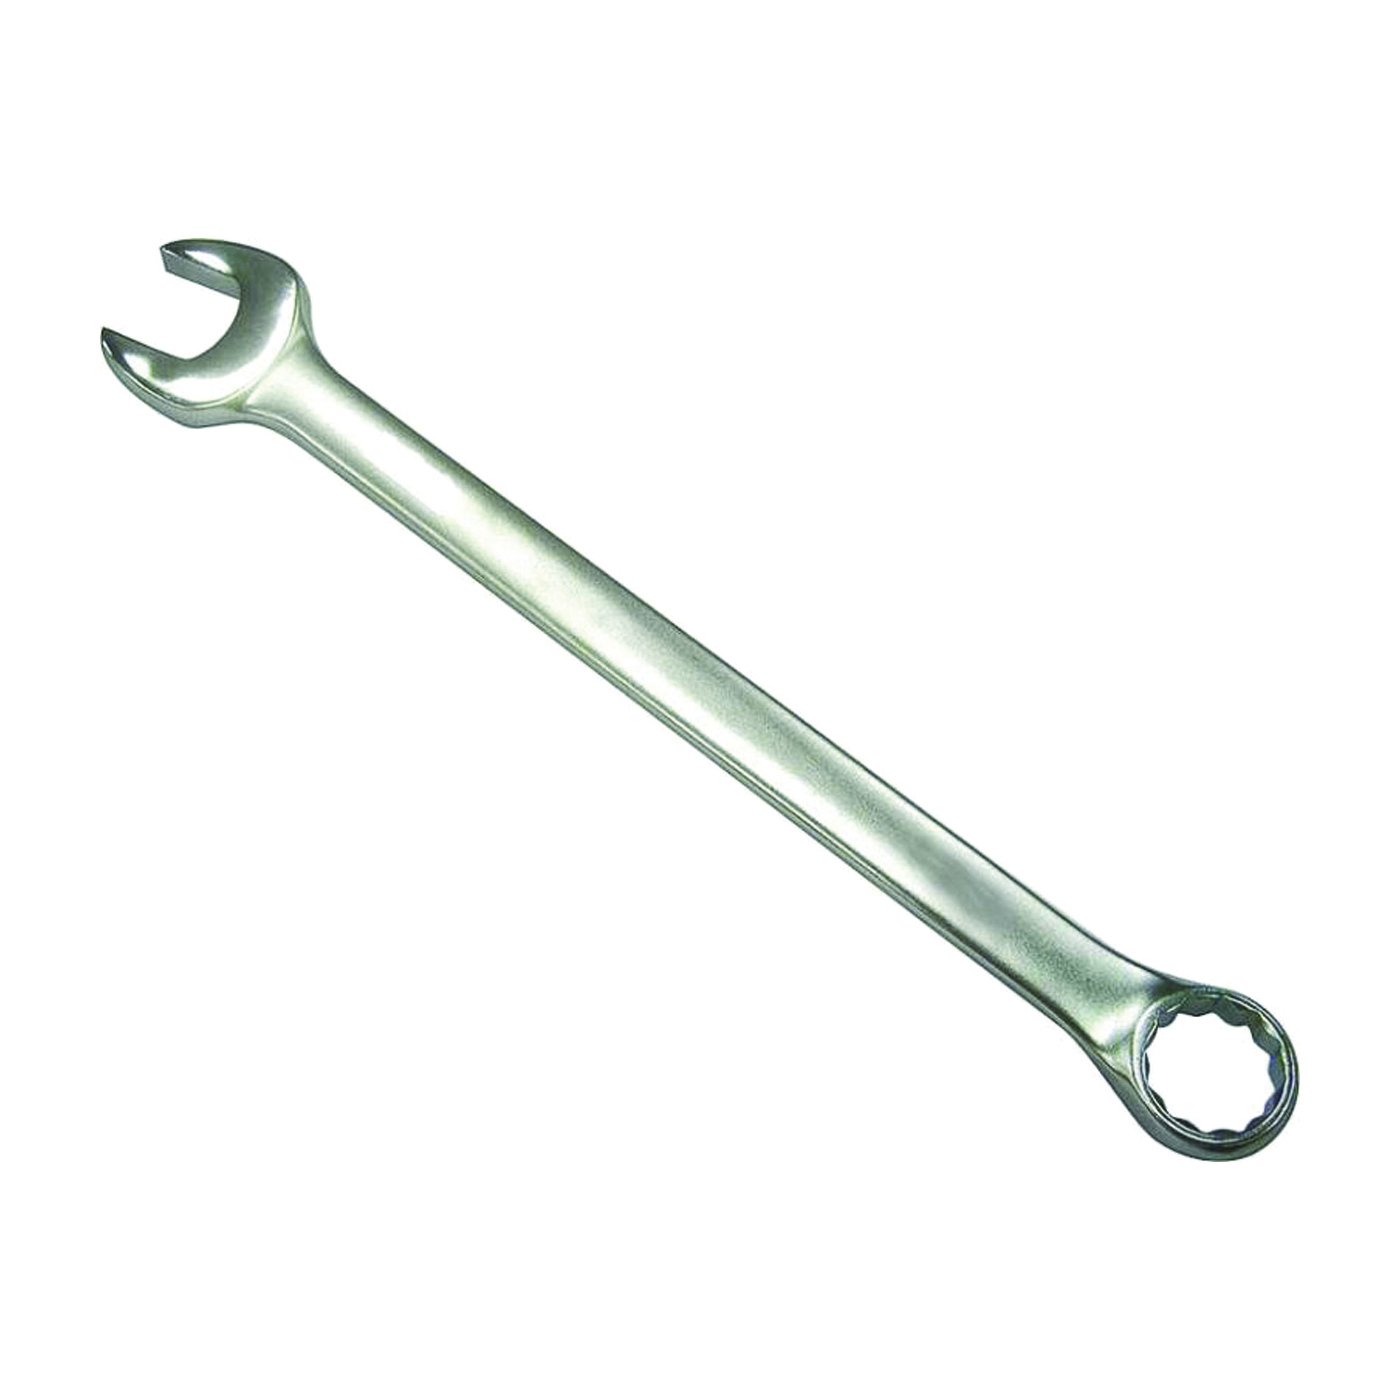 MT6545339 Combination Wrench, SAE, 3/8 in Head, Chrome Vanadium Steel